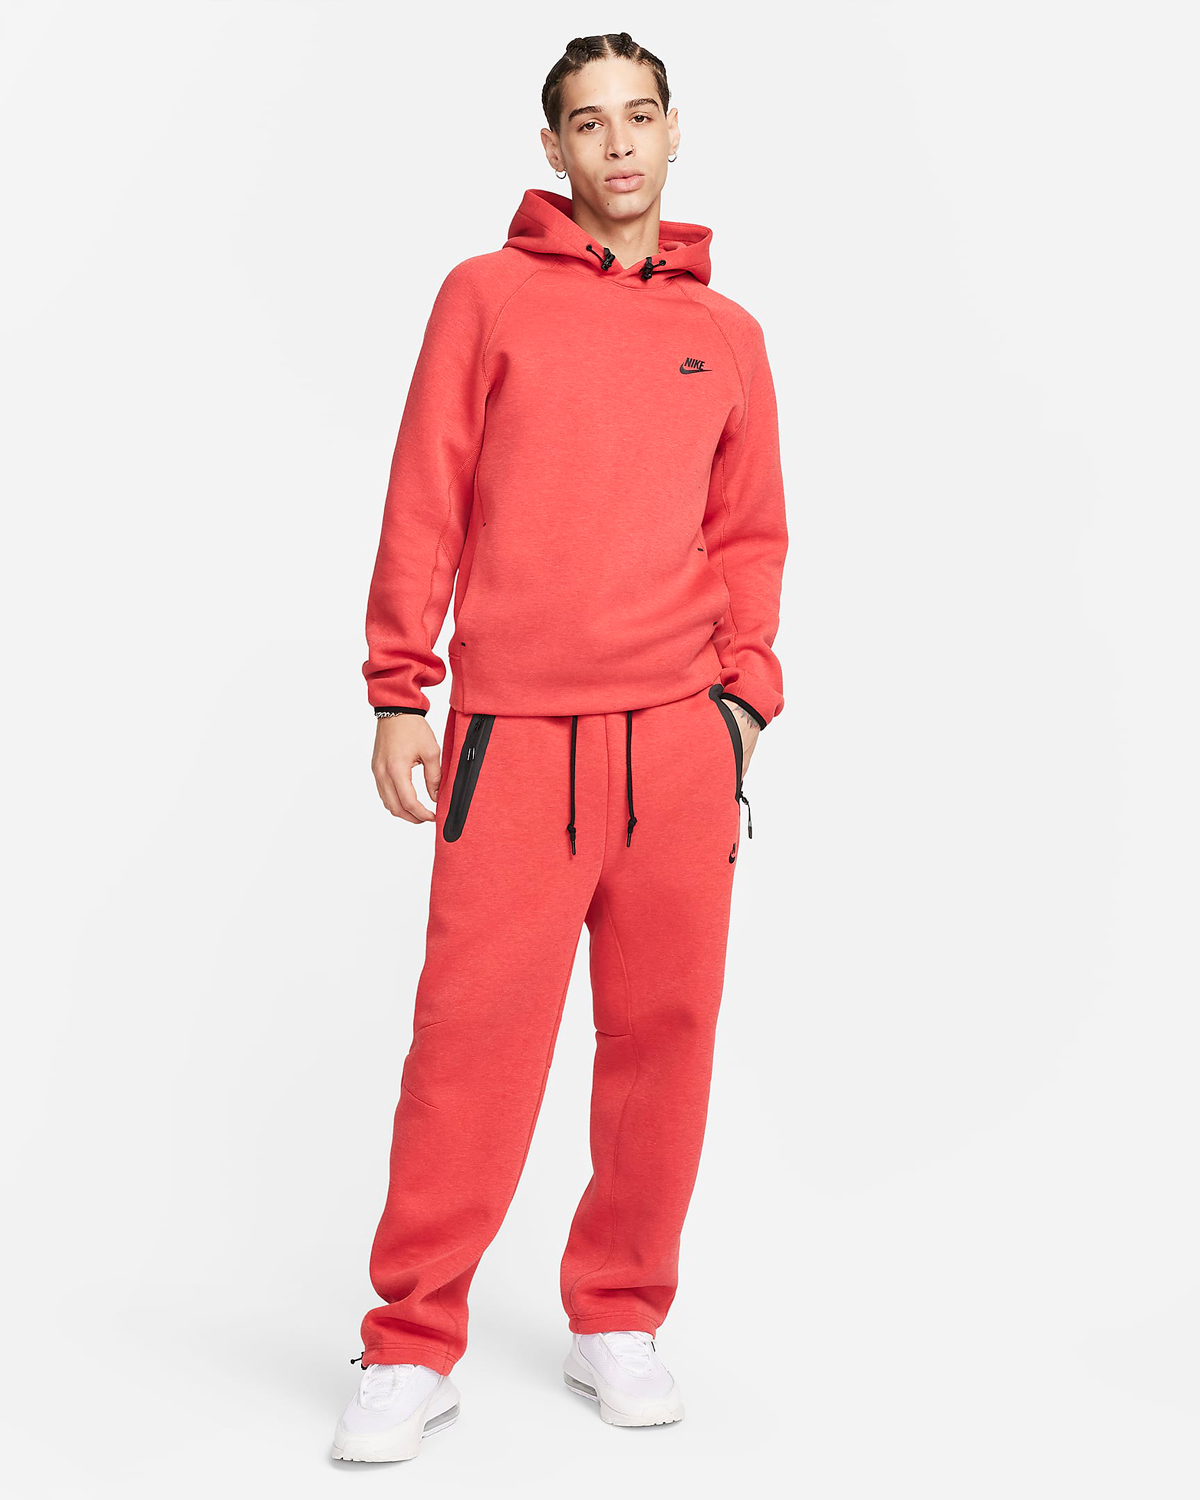 Nike-Tech-Fleece-Open-Hem-Sweatpants-Light-University-Red-Heather-Black-Outfit